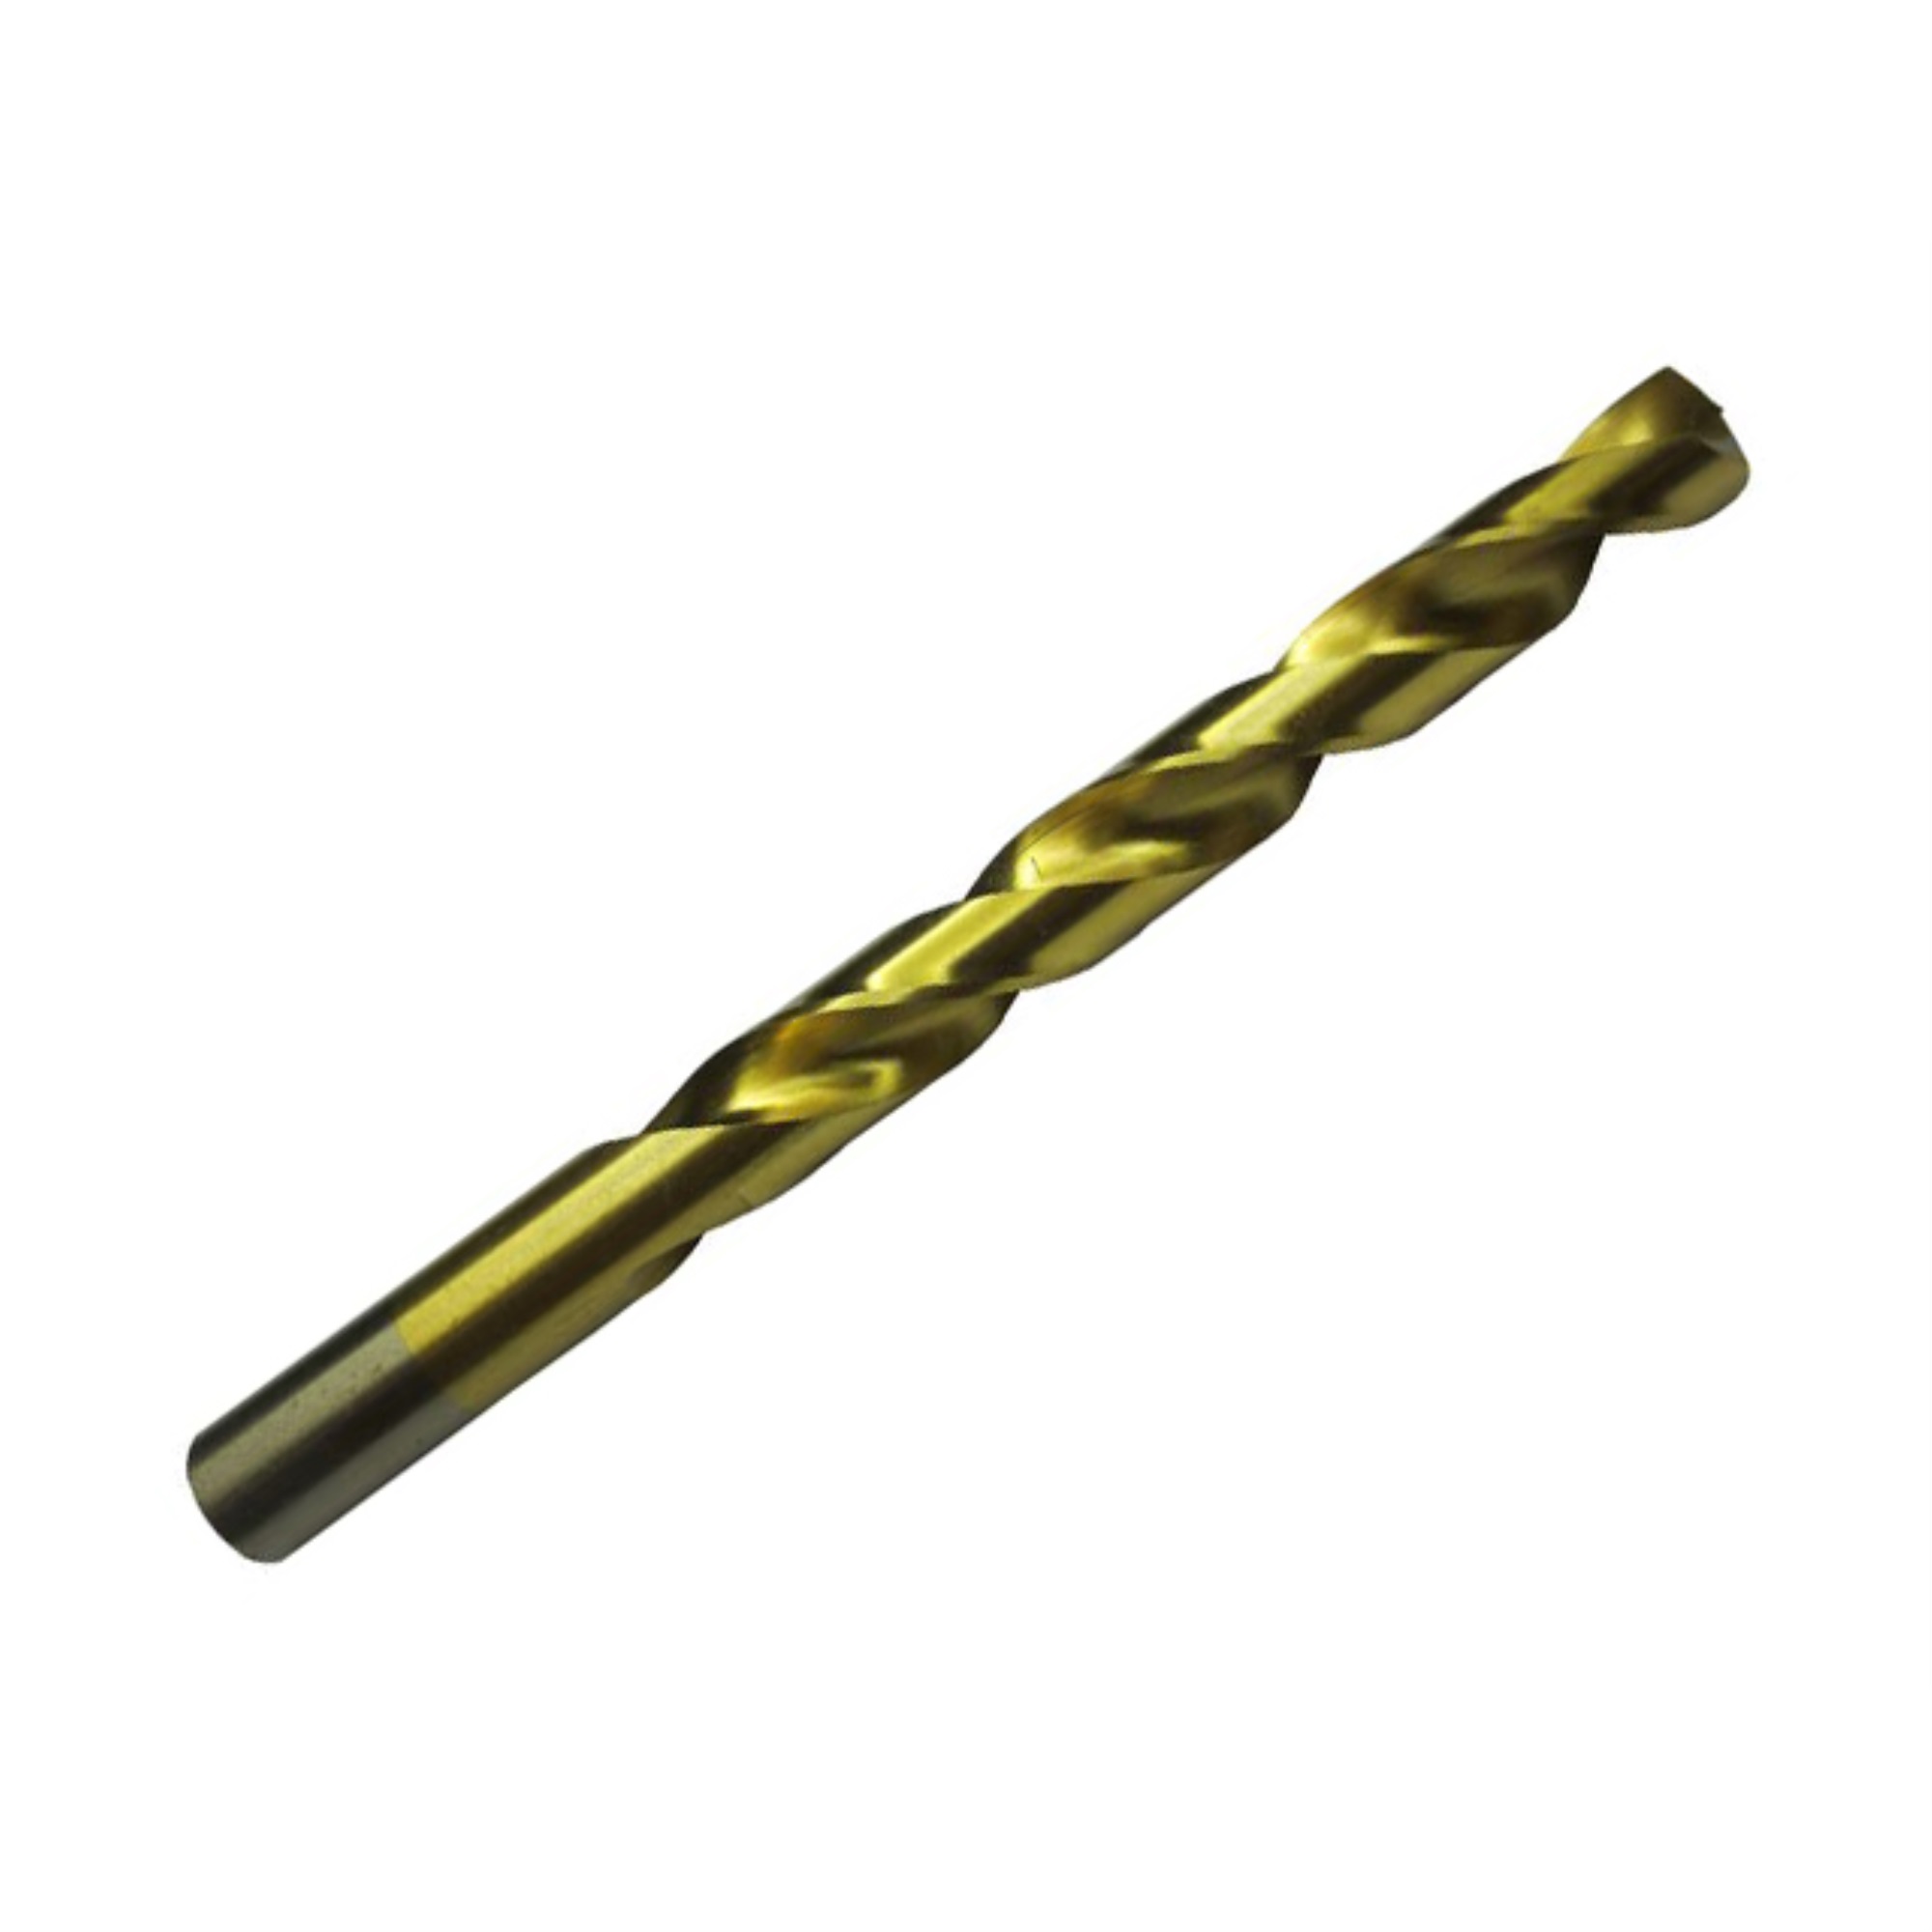 QUALTECH #31 Tin Coated Jobber Length Drill Bit, DWDTN31